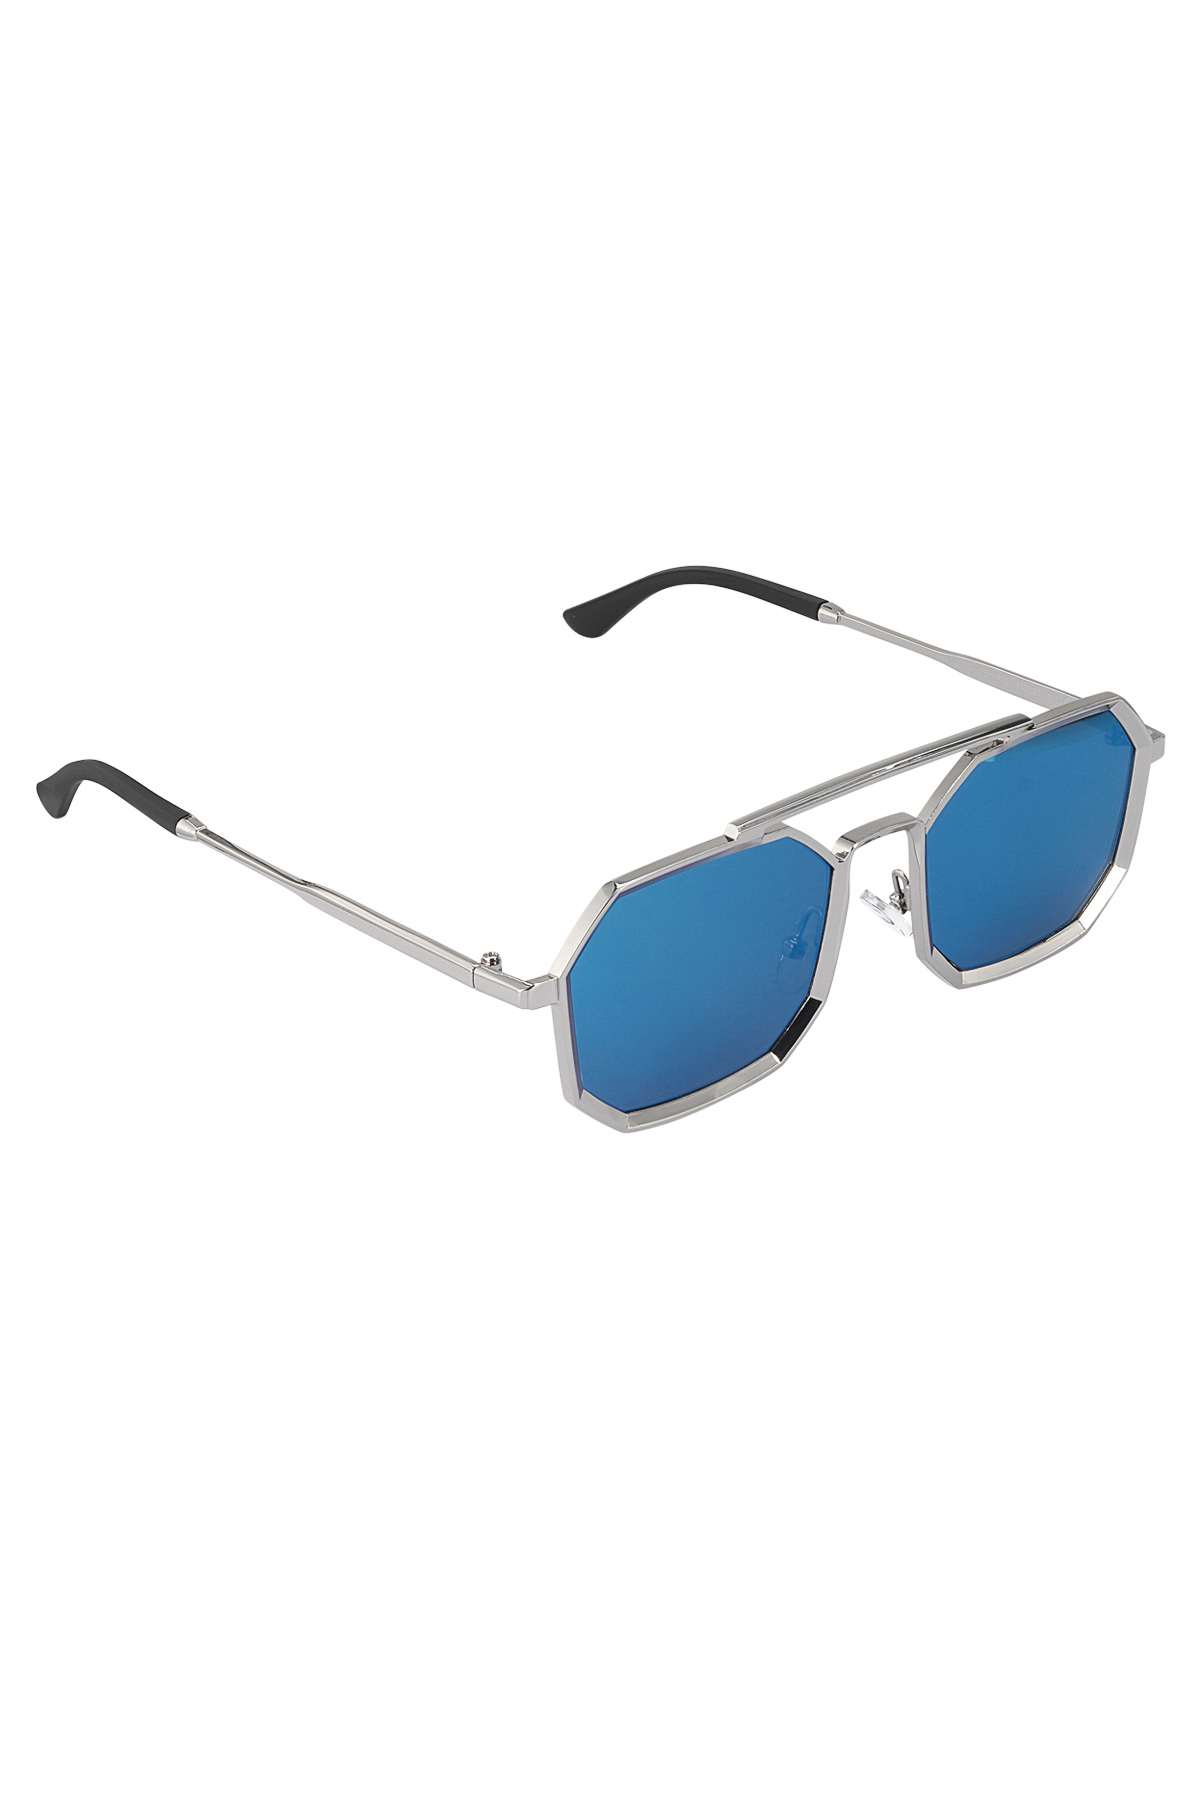 Sonnenbrille LuminLens - Blau Silber